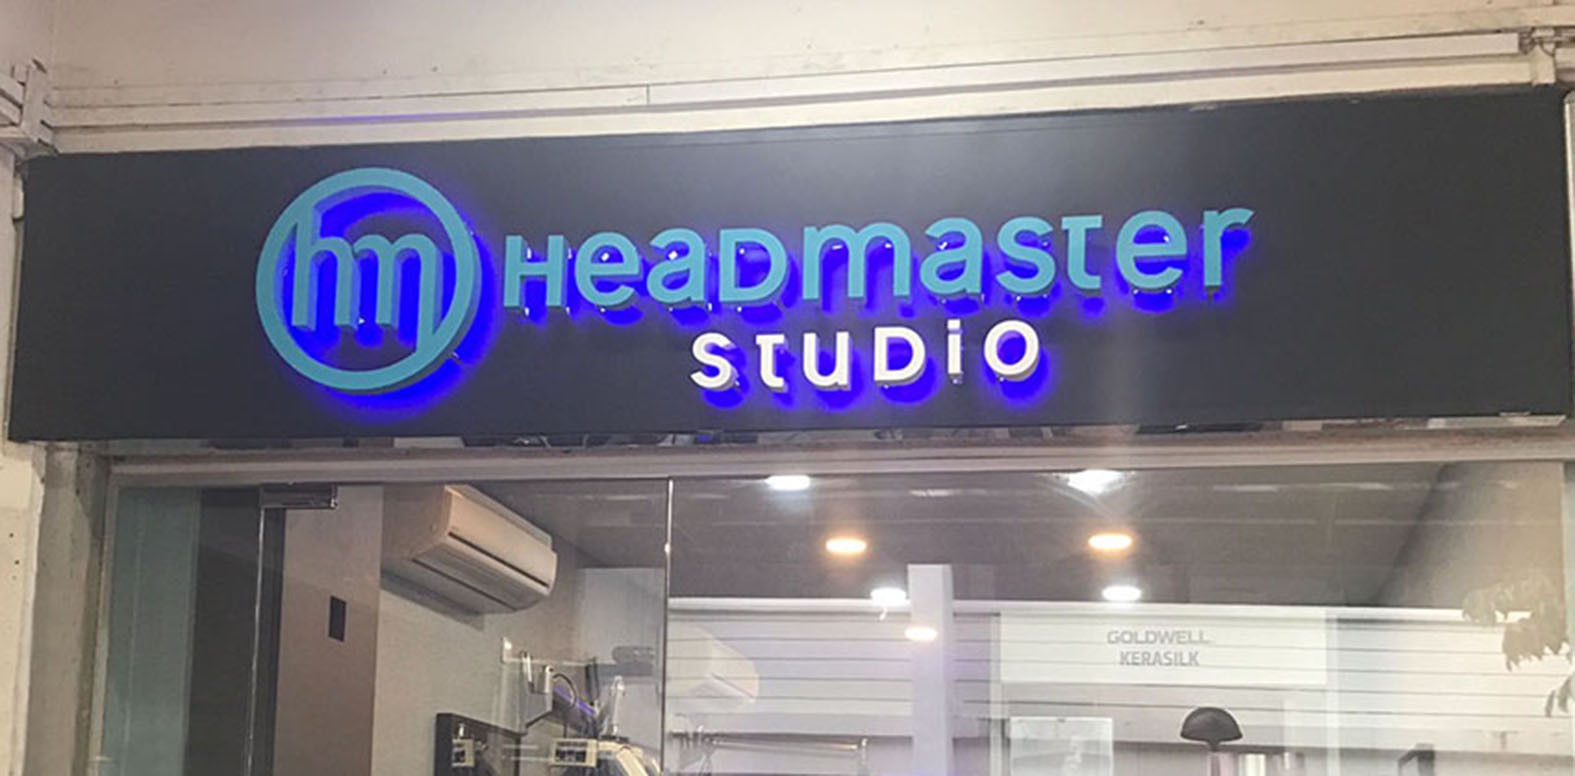 Headmaster Studio